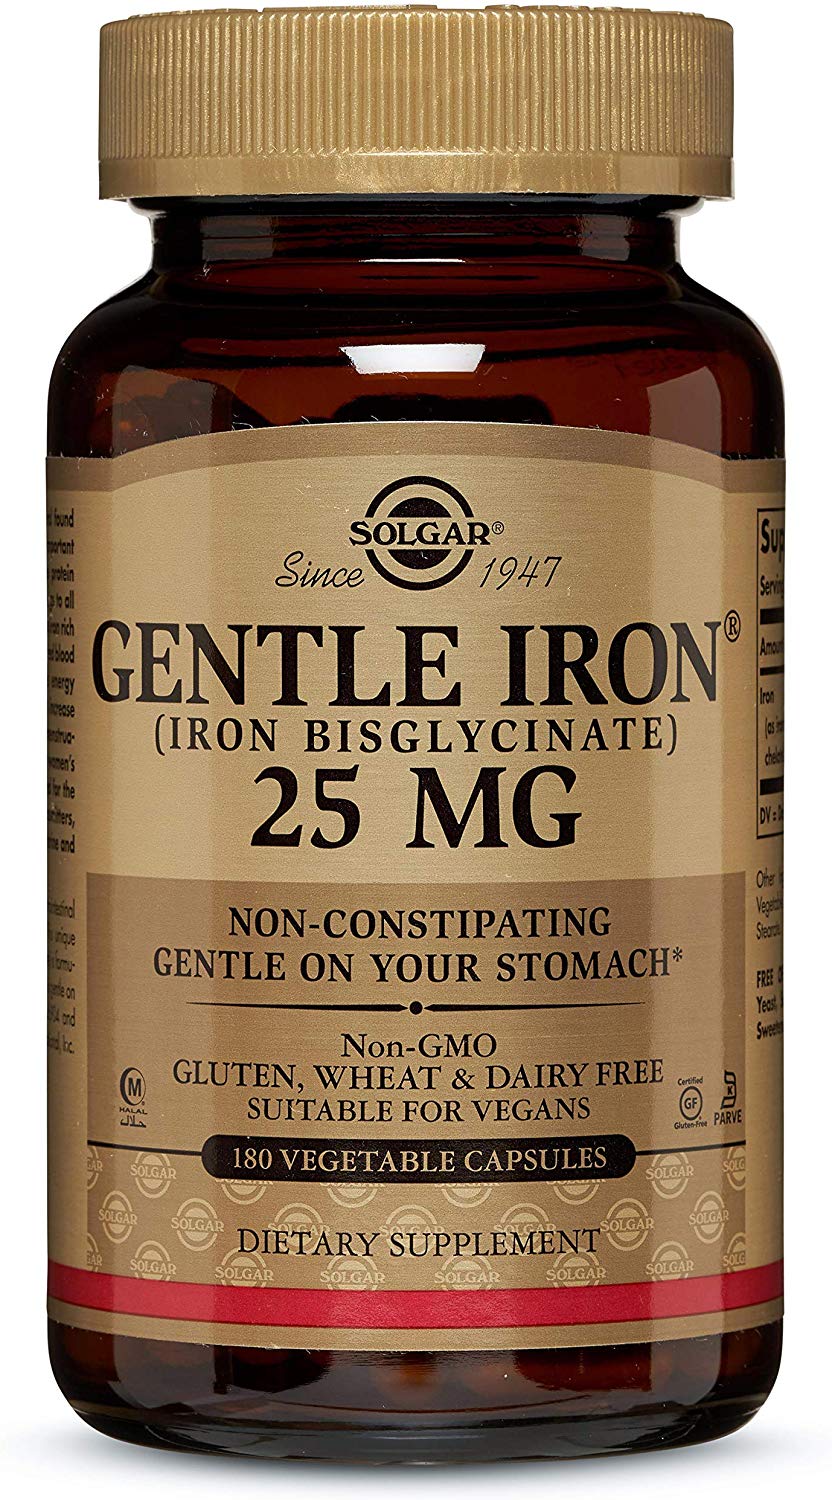 Best iron supplements for vegans